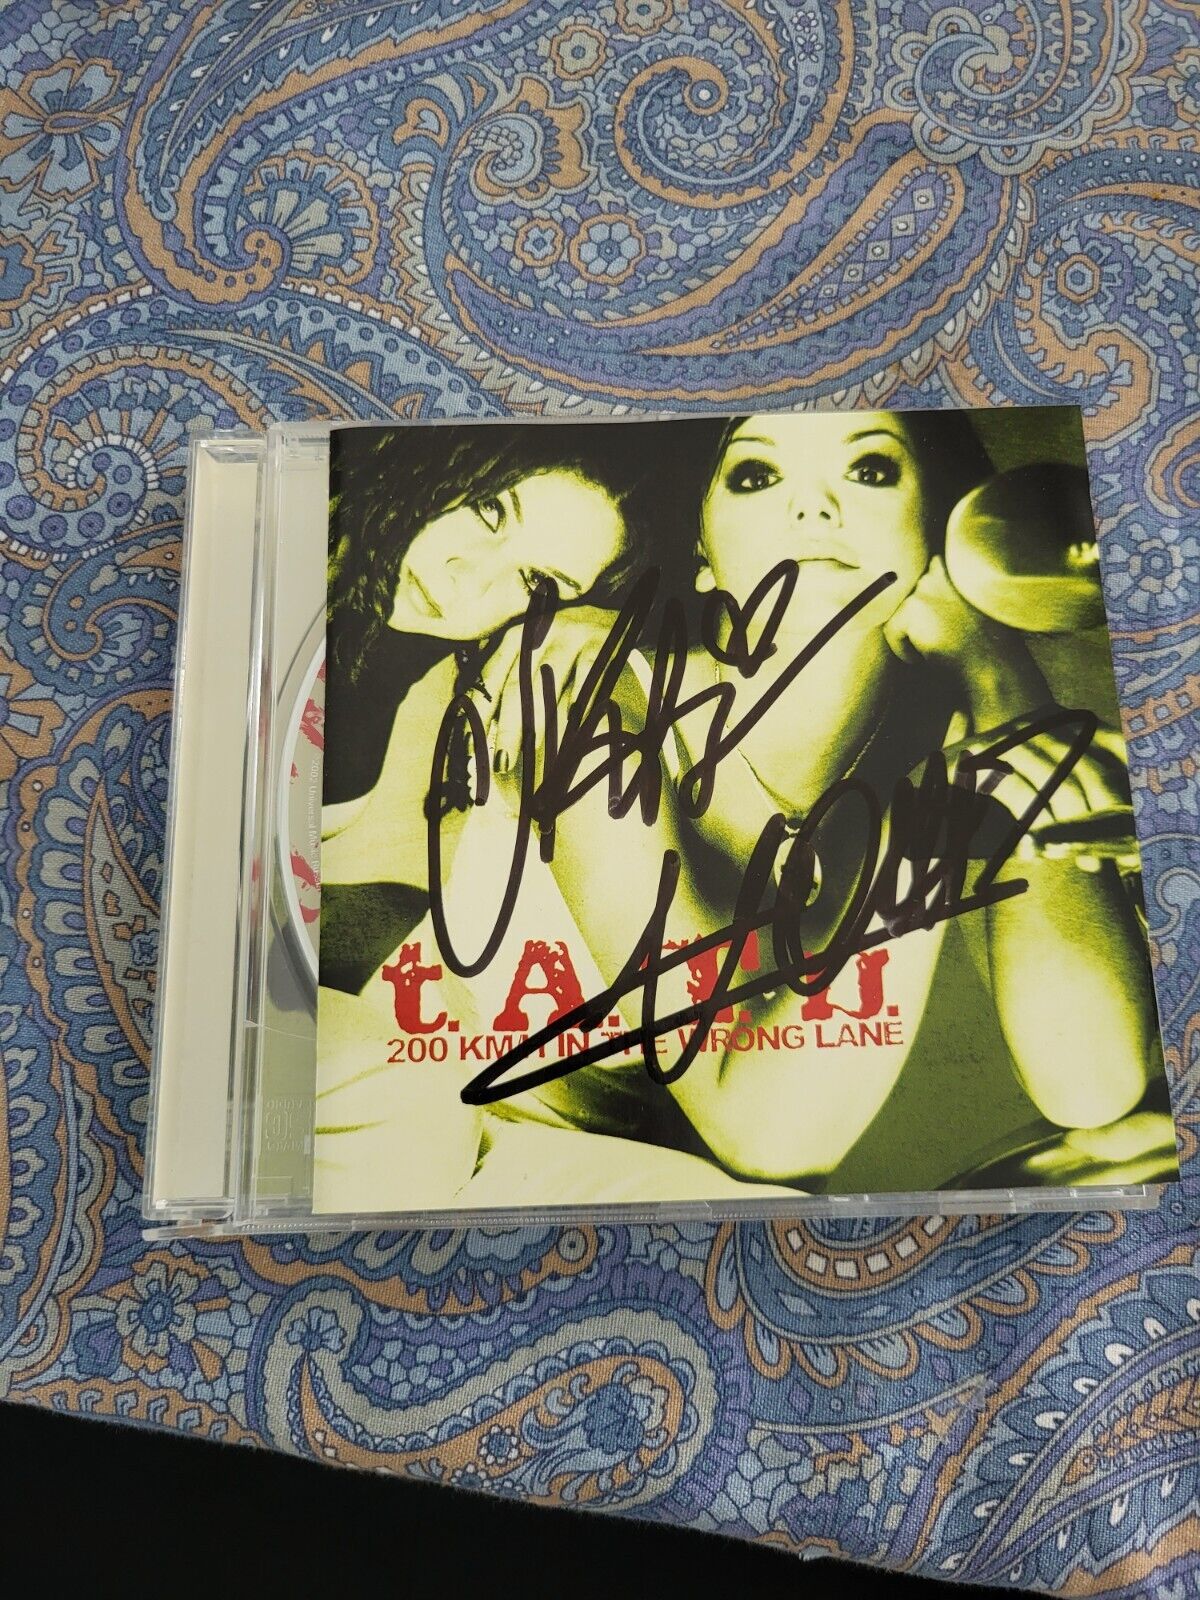 Autographed Signed CD Tatu t.a.t.u